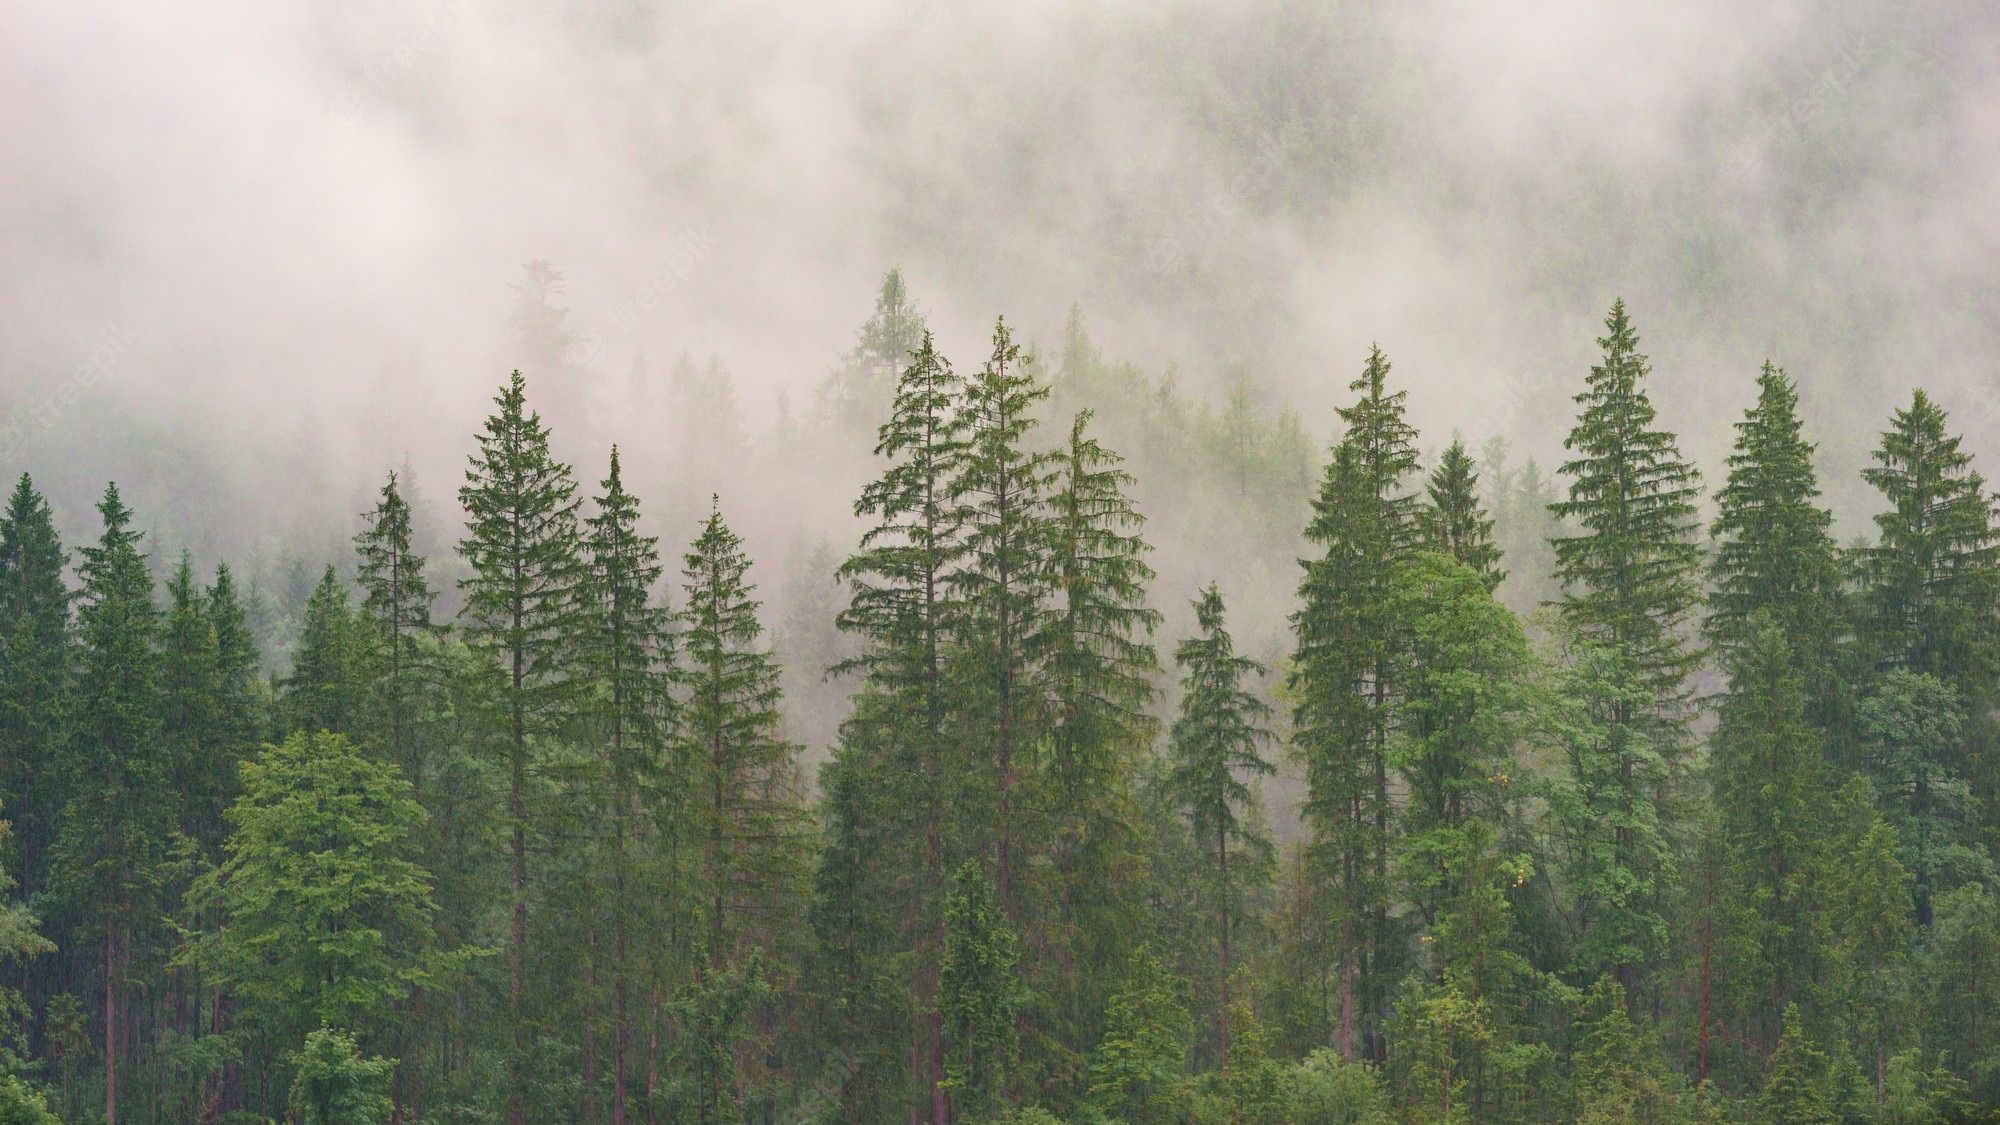 A foggy forest with tall trees. - Fog